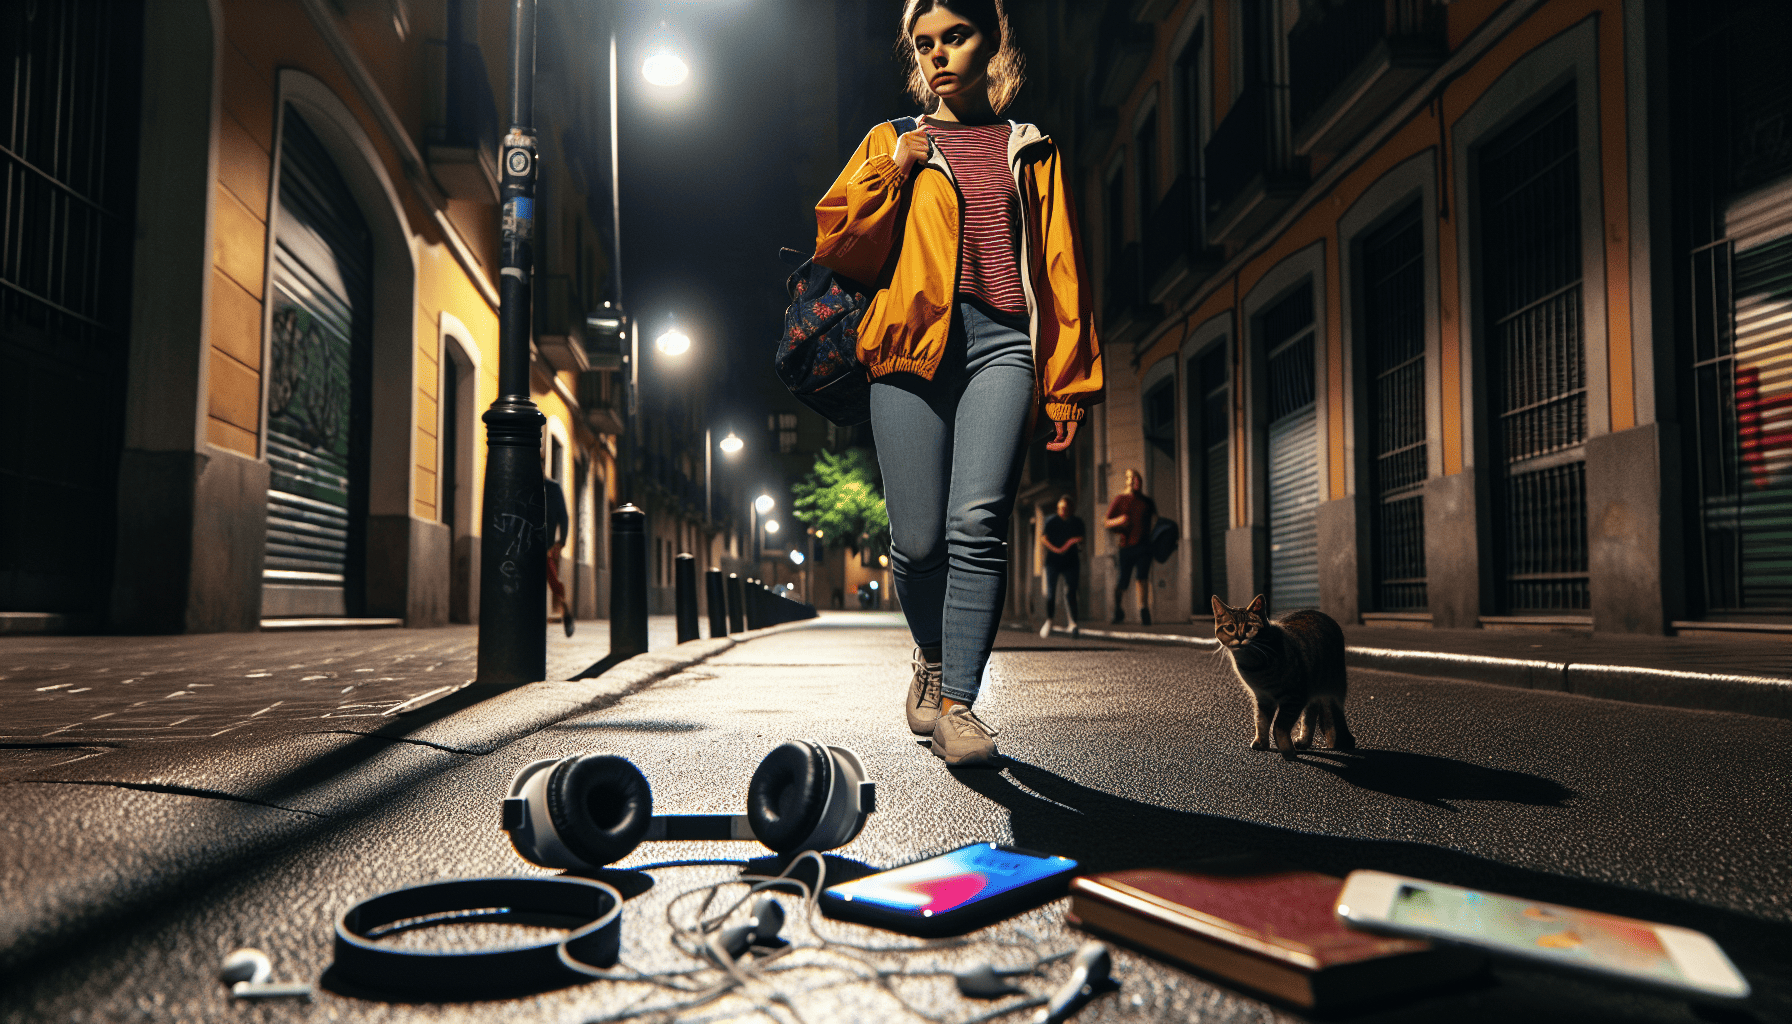 Avoiding distractions while walking at night